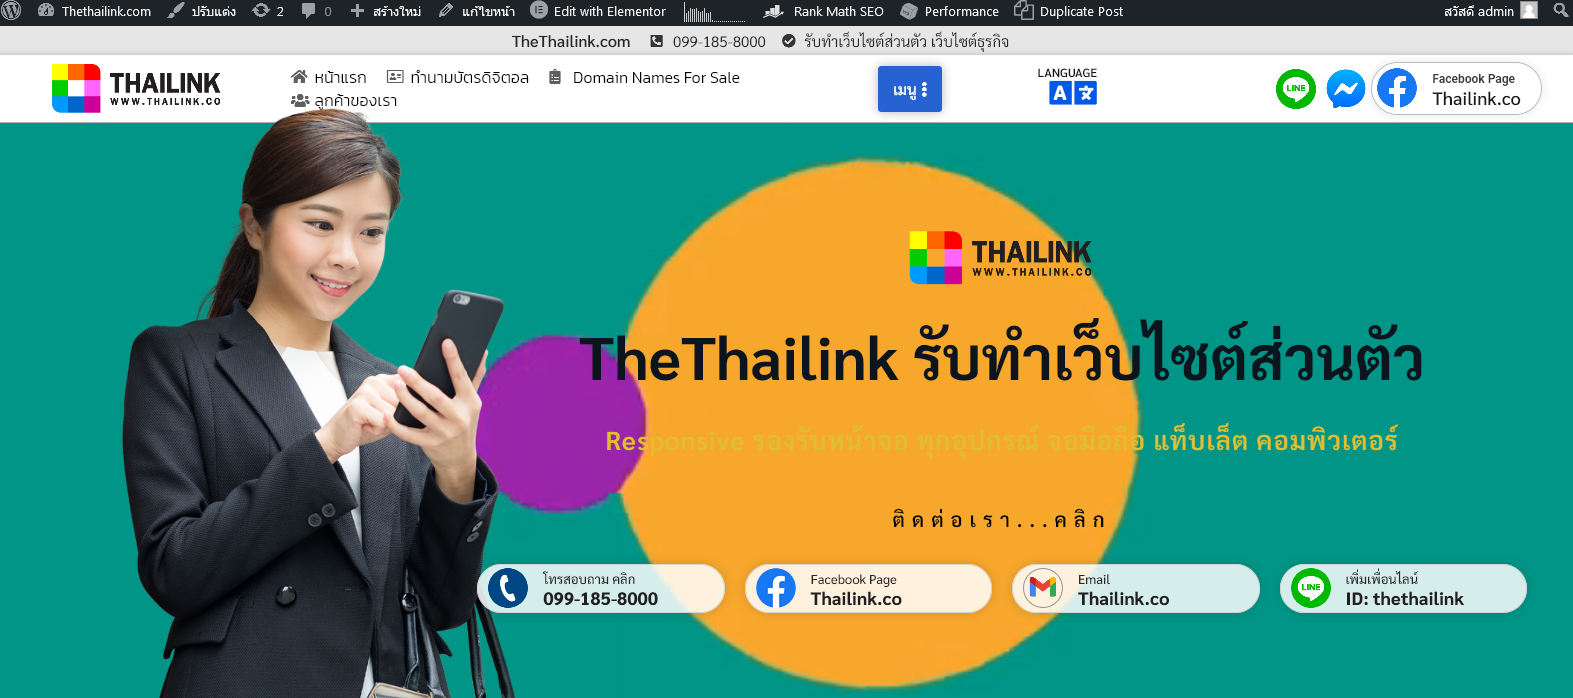 Screenshot-2021-10-15-at-11-11-31-TheThailink-บริการรับทำเว็บไซต์ส่วนตัว-Thethailink-com-2.png